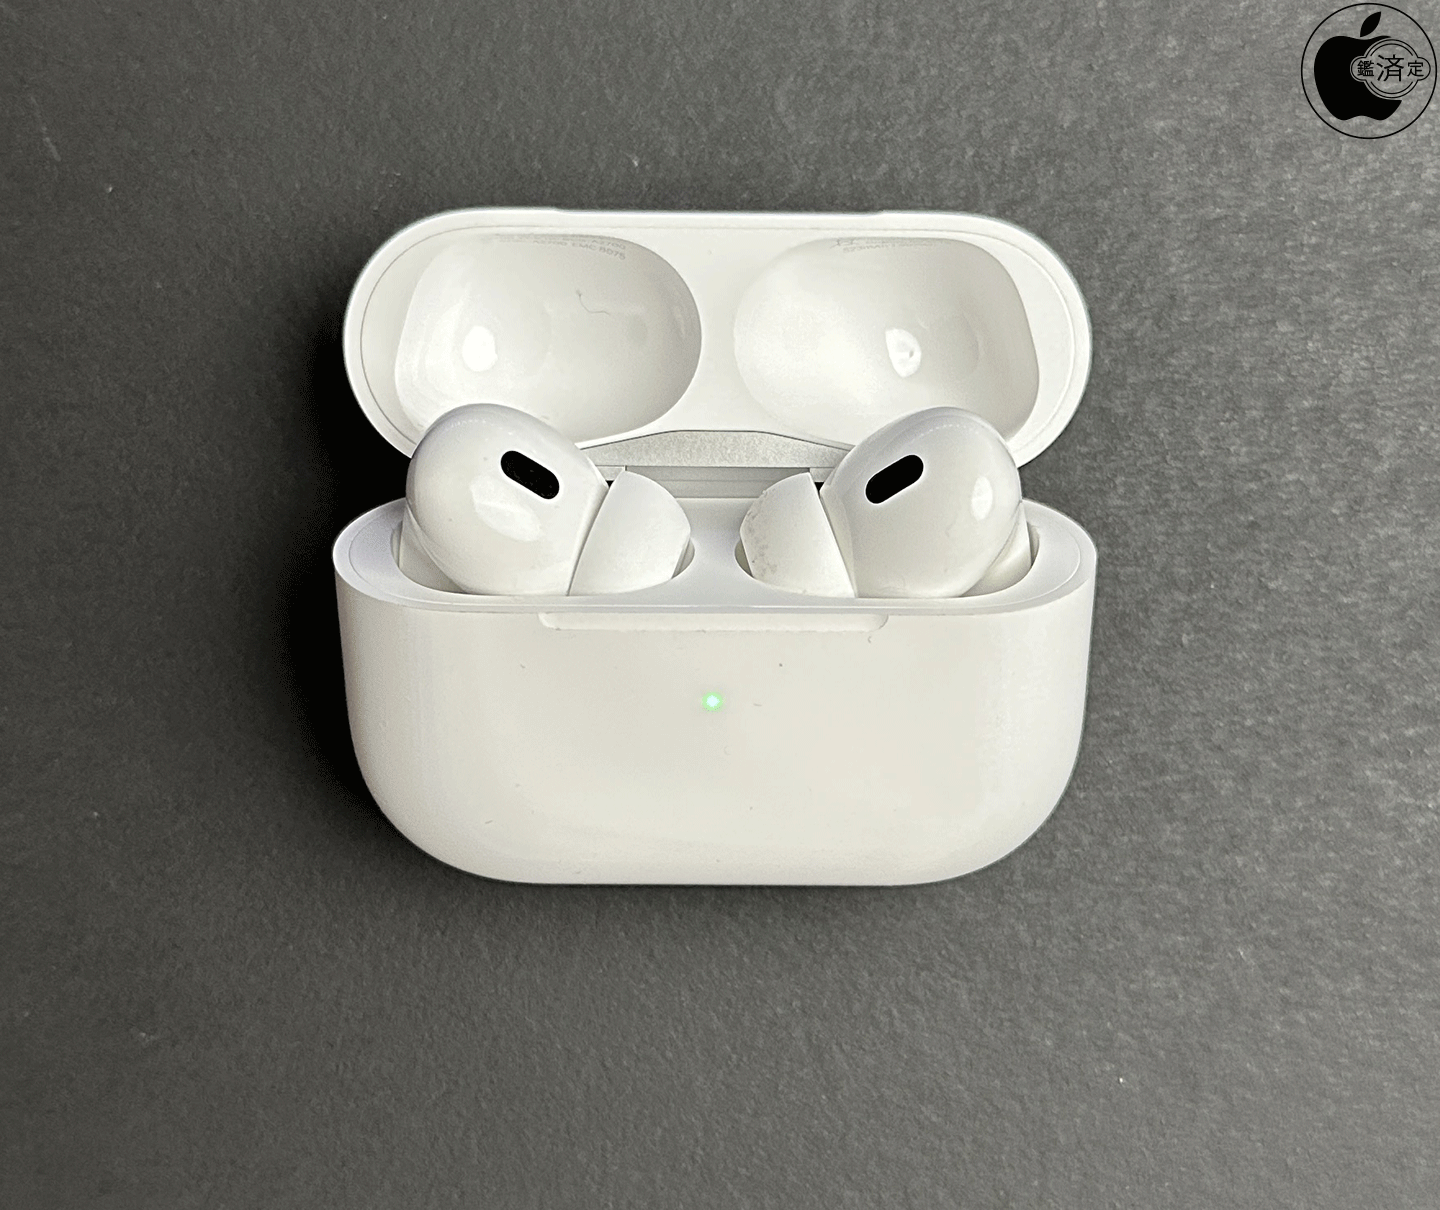 muxiafeiniaoさま専用 Apple airpods pro 第2世代